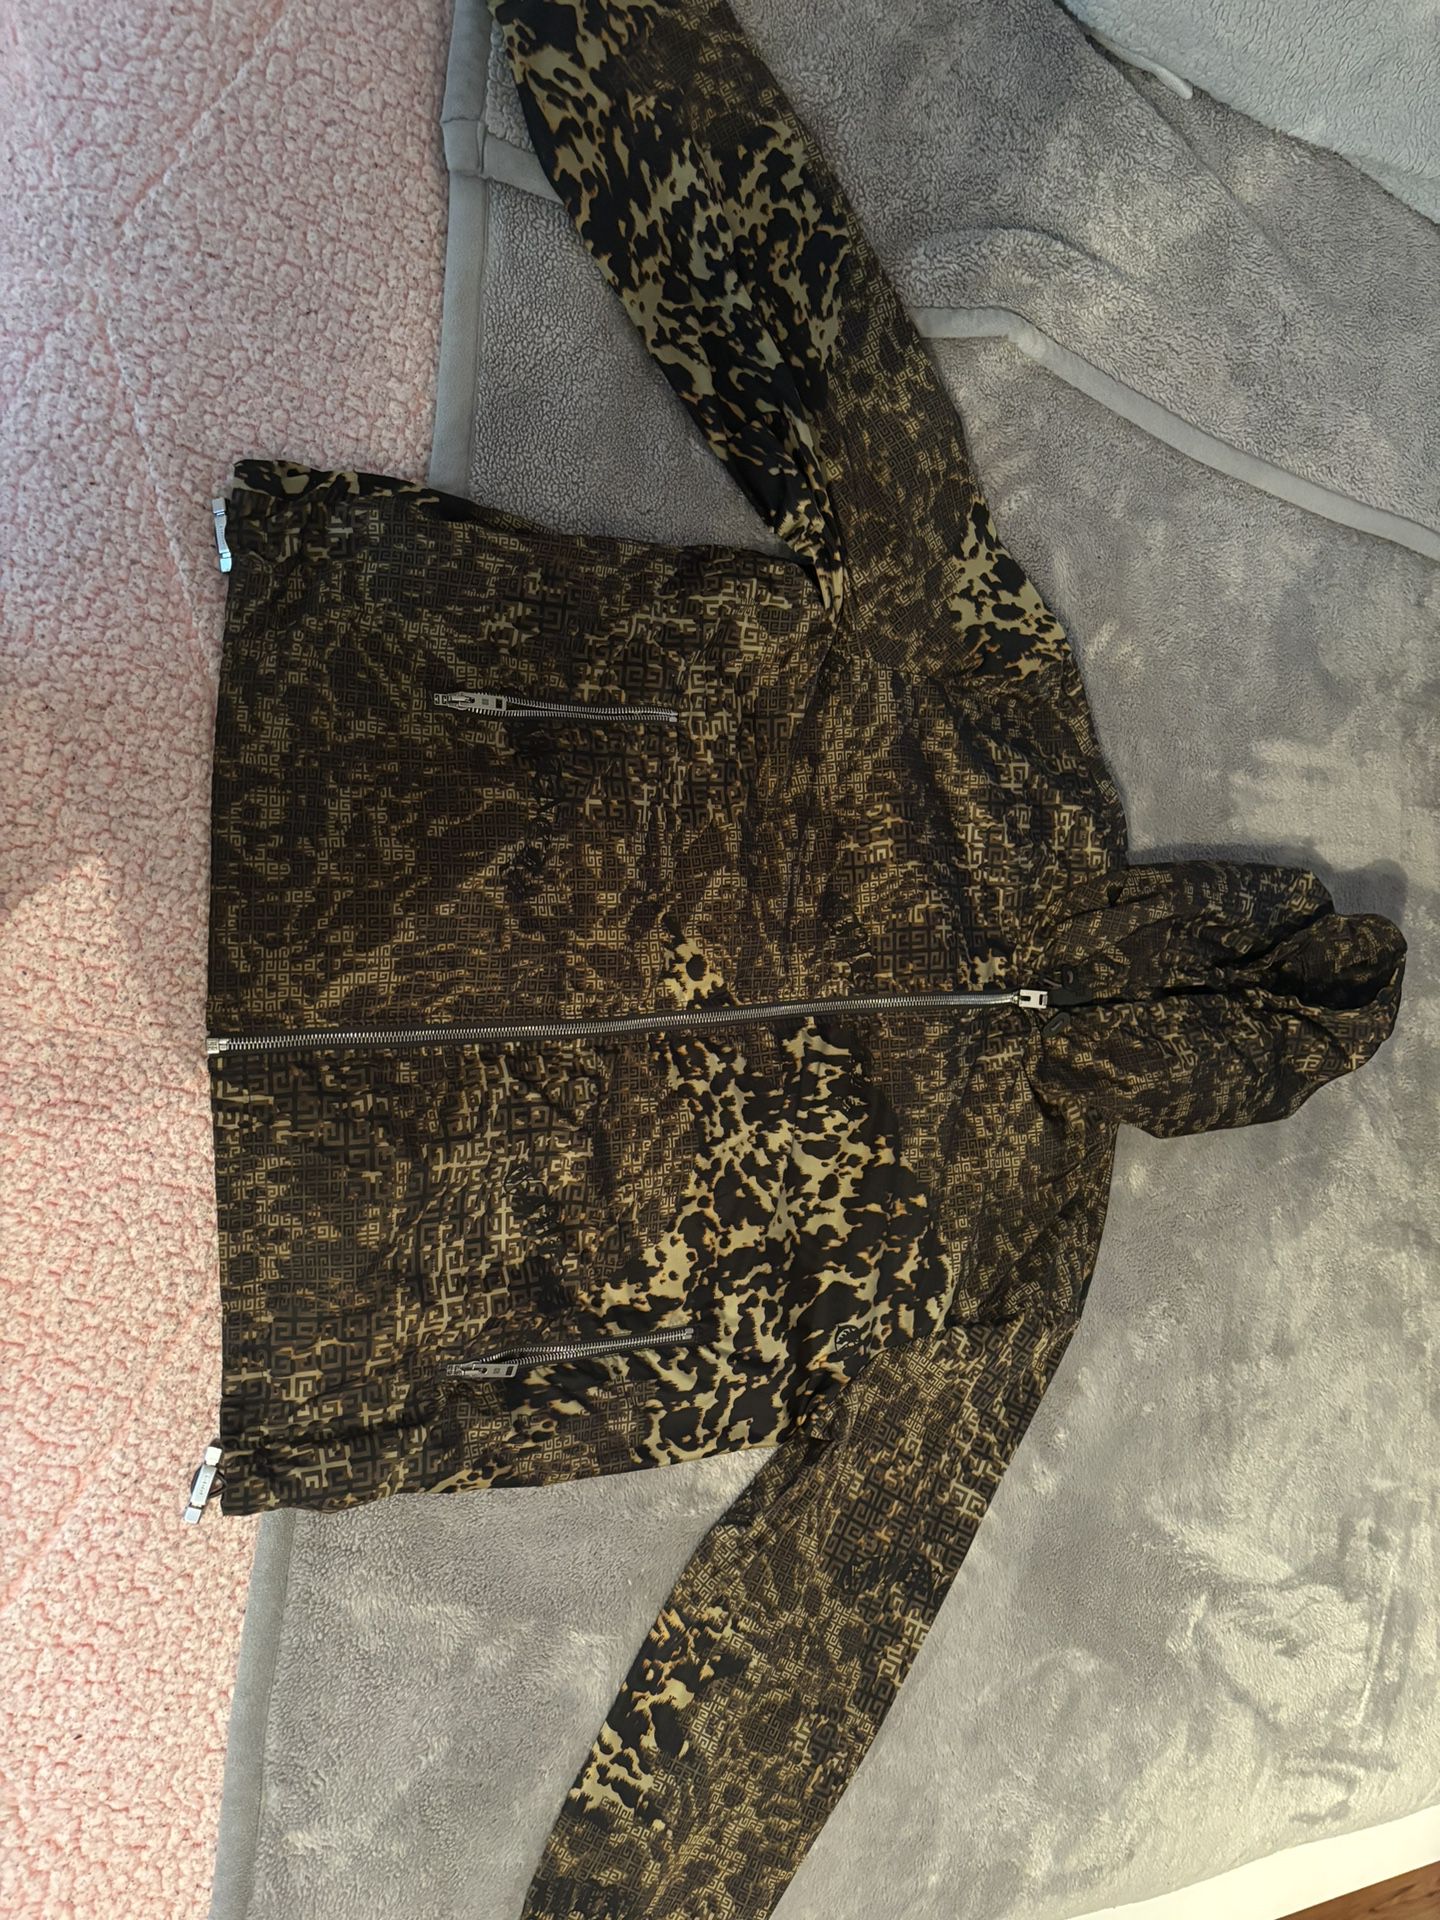 Givenchy Black & Khaki Windbreaker Fits Like A Large ($1990 Retail) $500